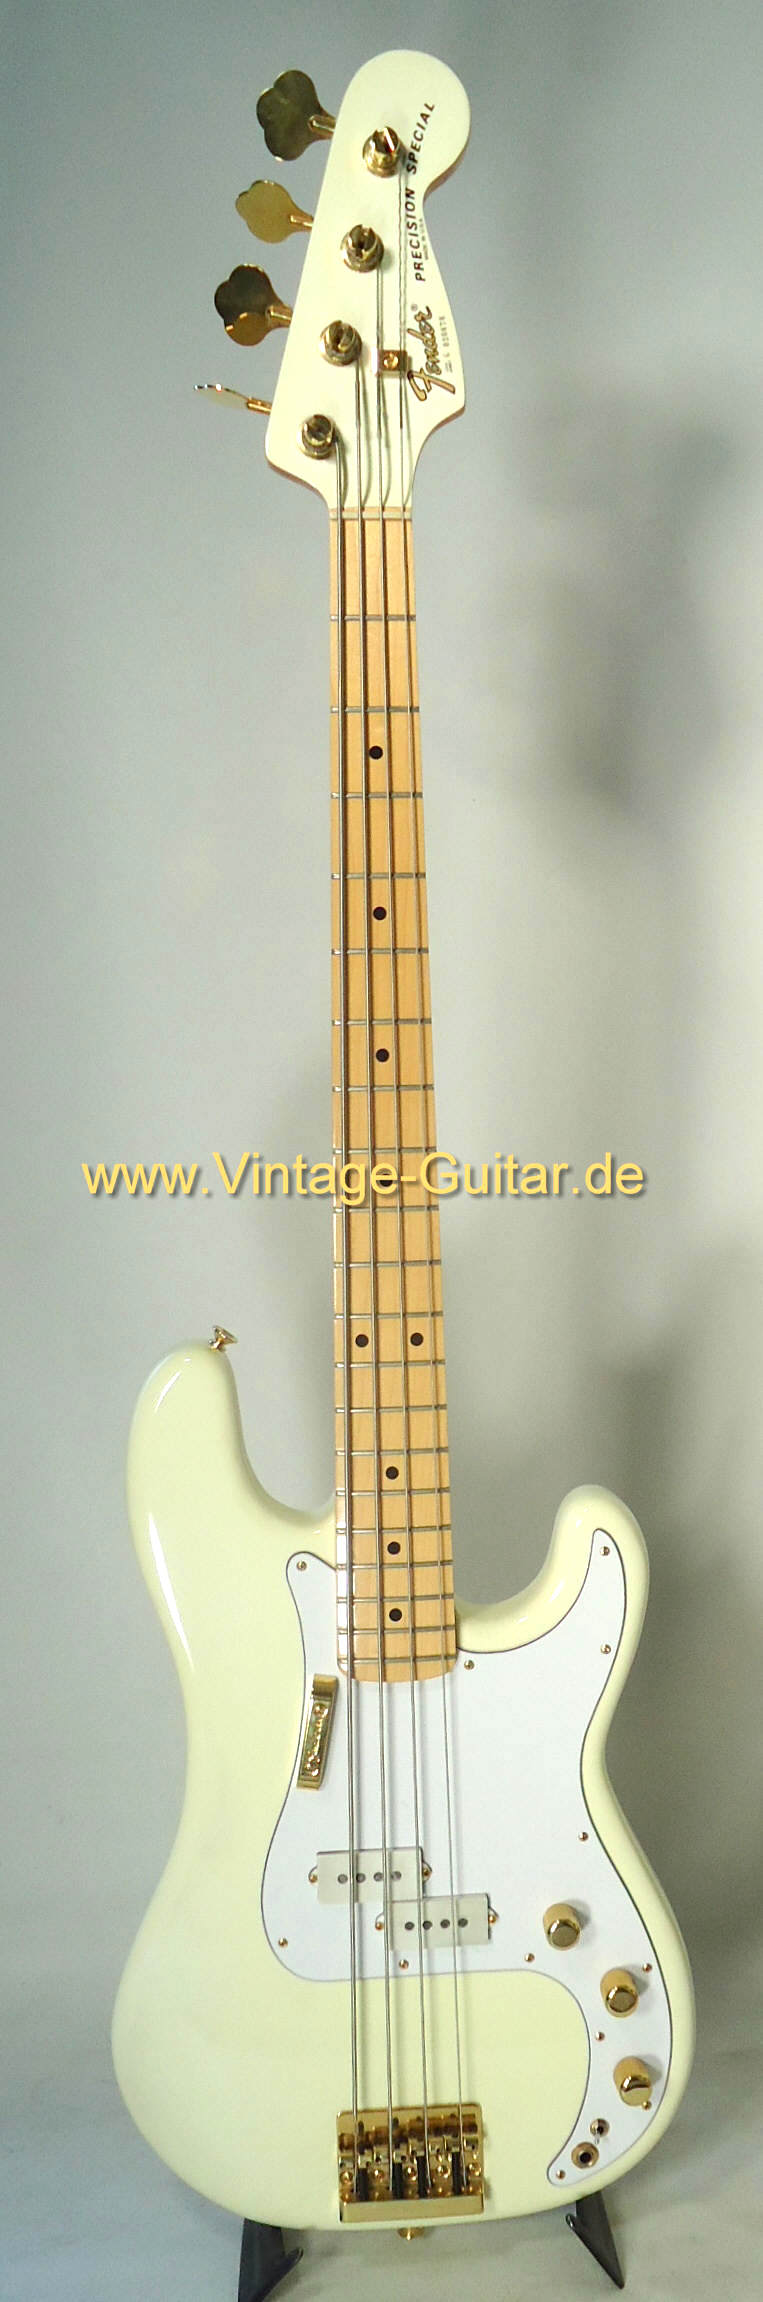 Fender-Precision-Special-1982-white.jpg